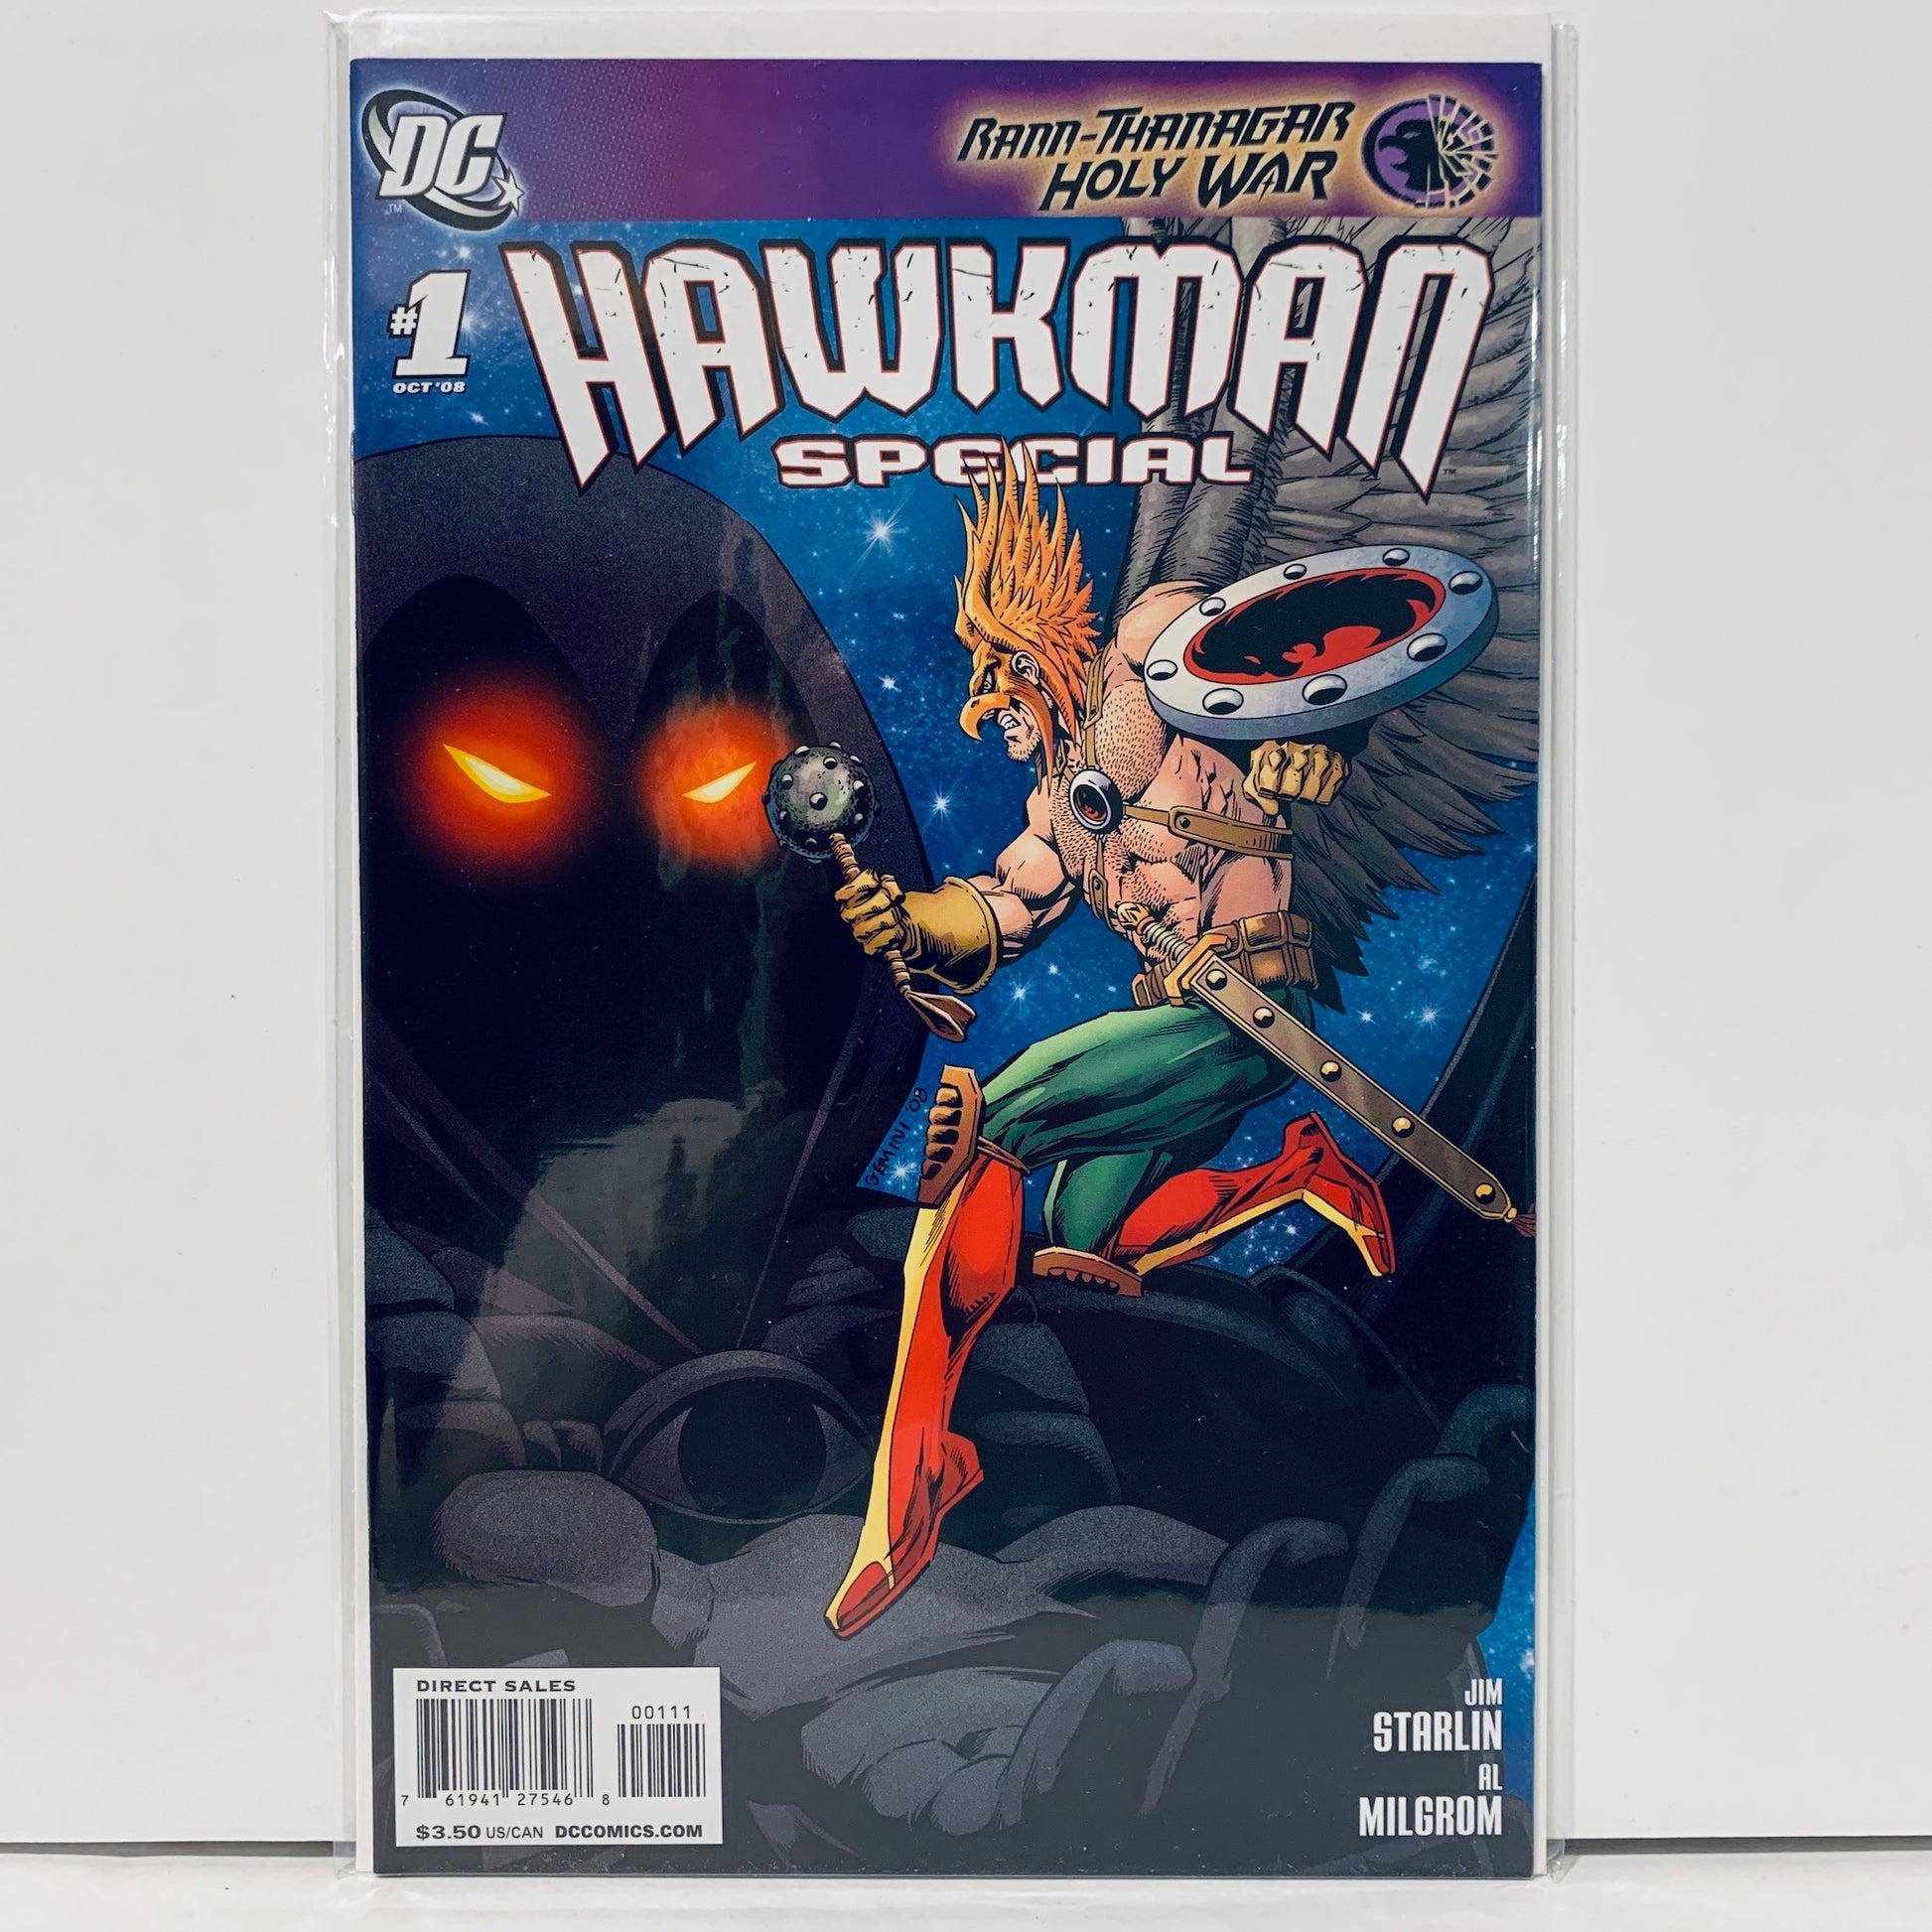 Hawkman Special (2008) #1 (NM)